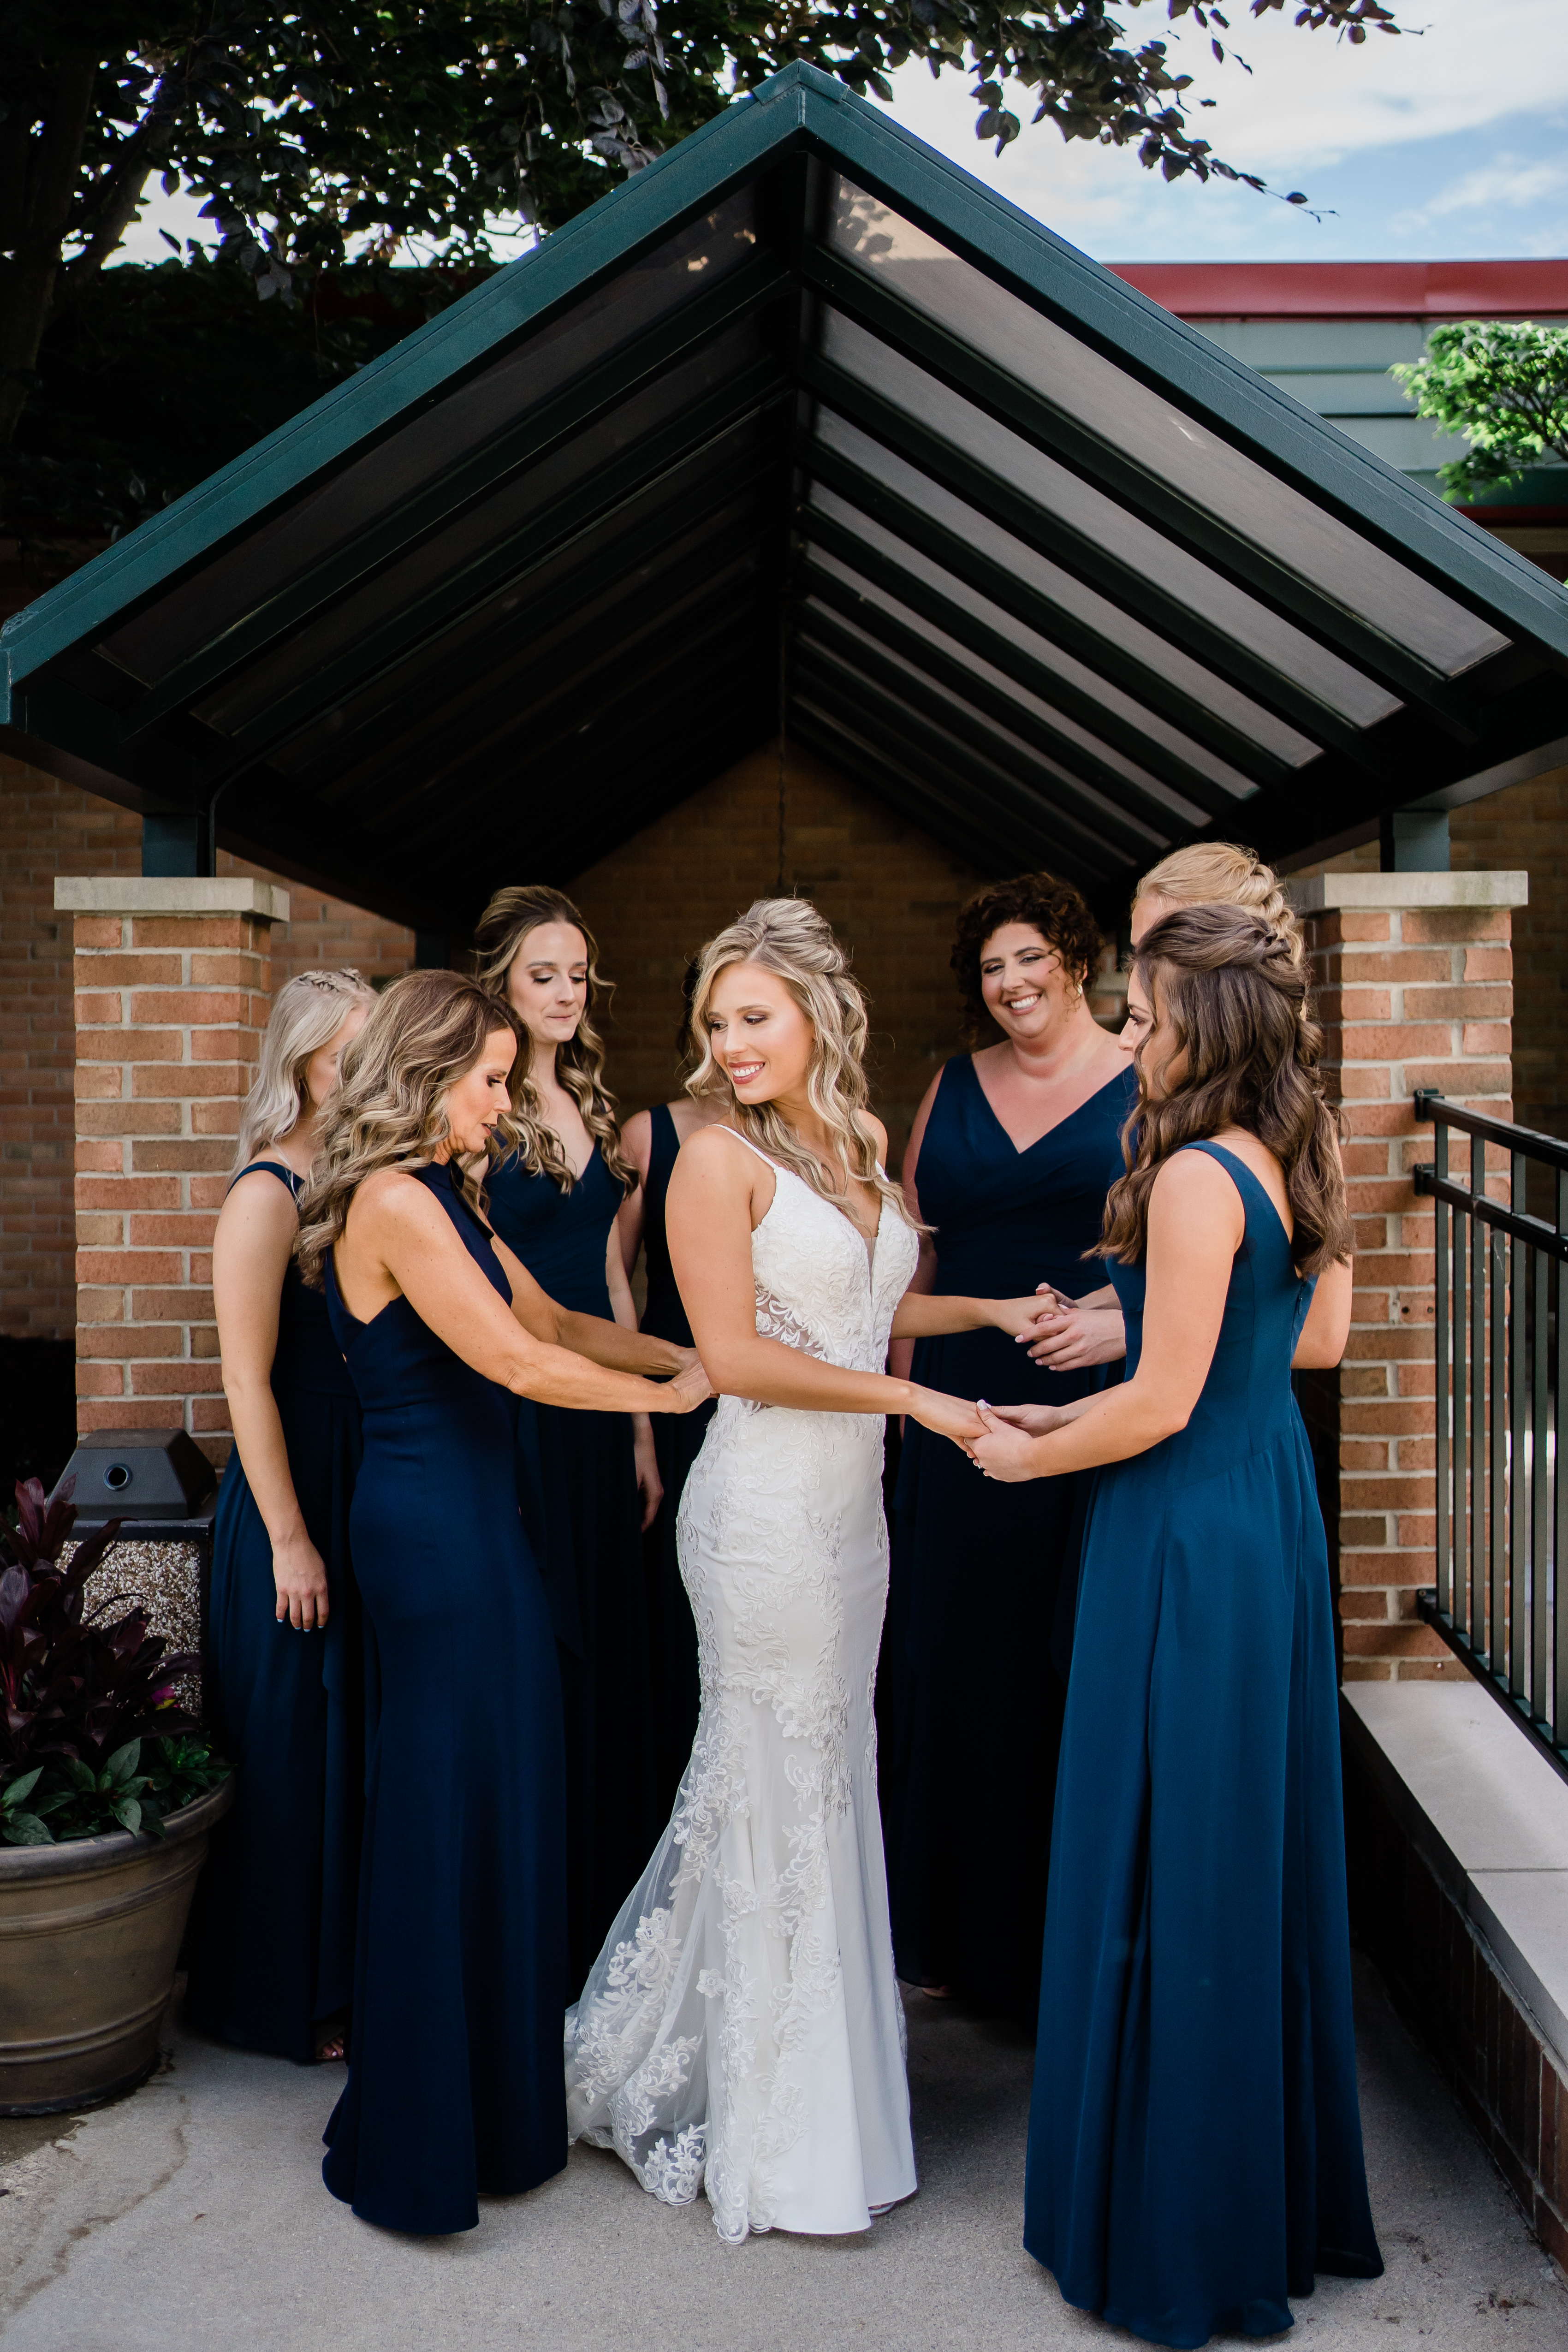 Fort Wayne wedding photographers capture bride standing with bridesmaids